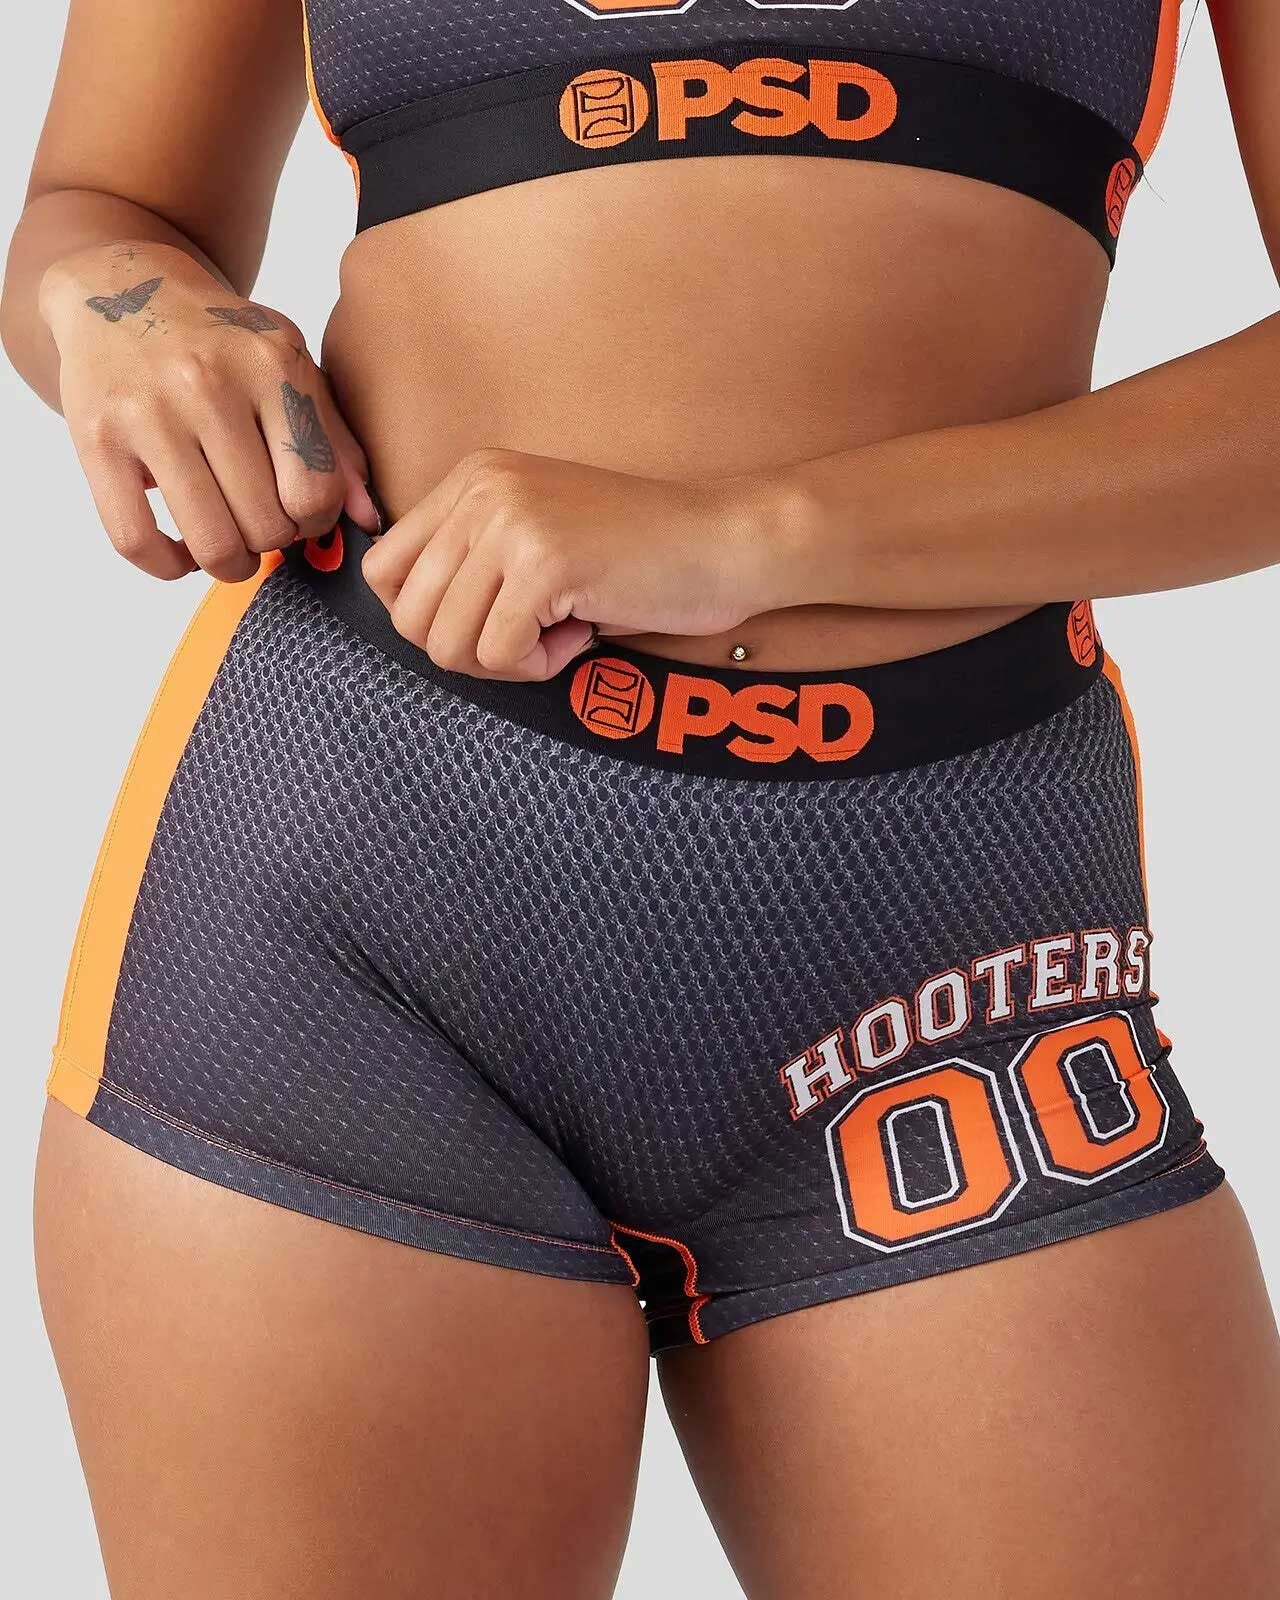 PSD UNDERWEAR WOMENS Hooters Uniform Boyshorts Orange $20.00